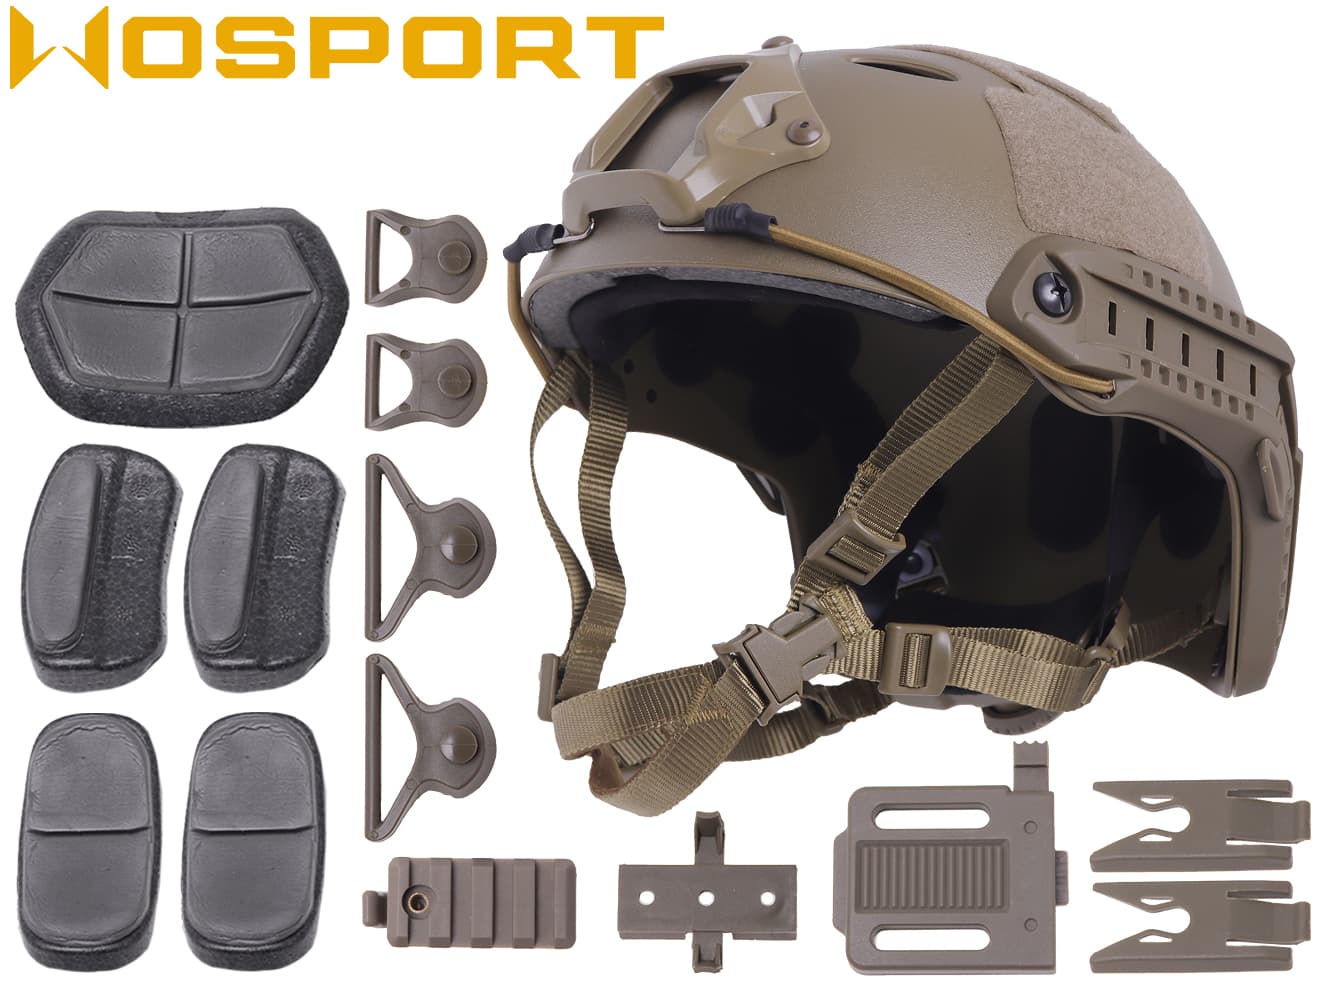 WO-HLM-003T WoSporT FAST CARBON type helmet high grade VERSION M-SIZE TAN